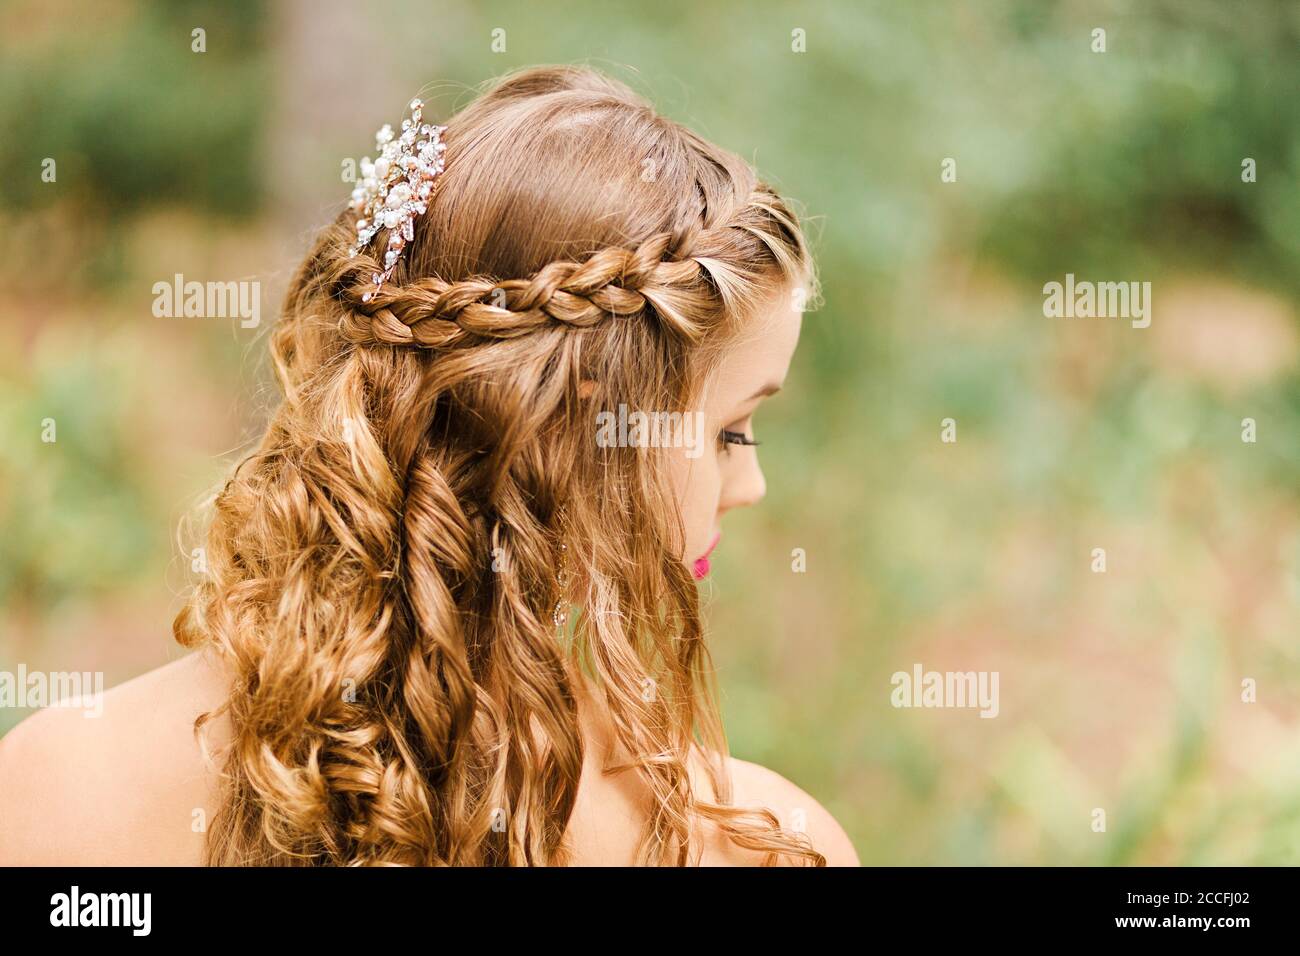 Bride, wedding, garden, young woman, wedding dress, landscape format, headdress, braid Stock Photo